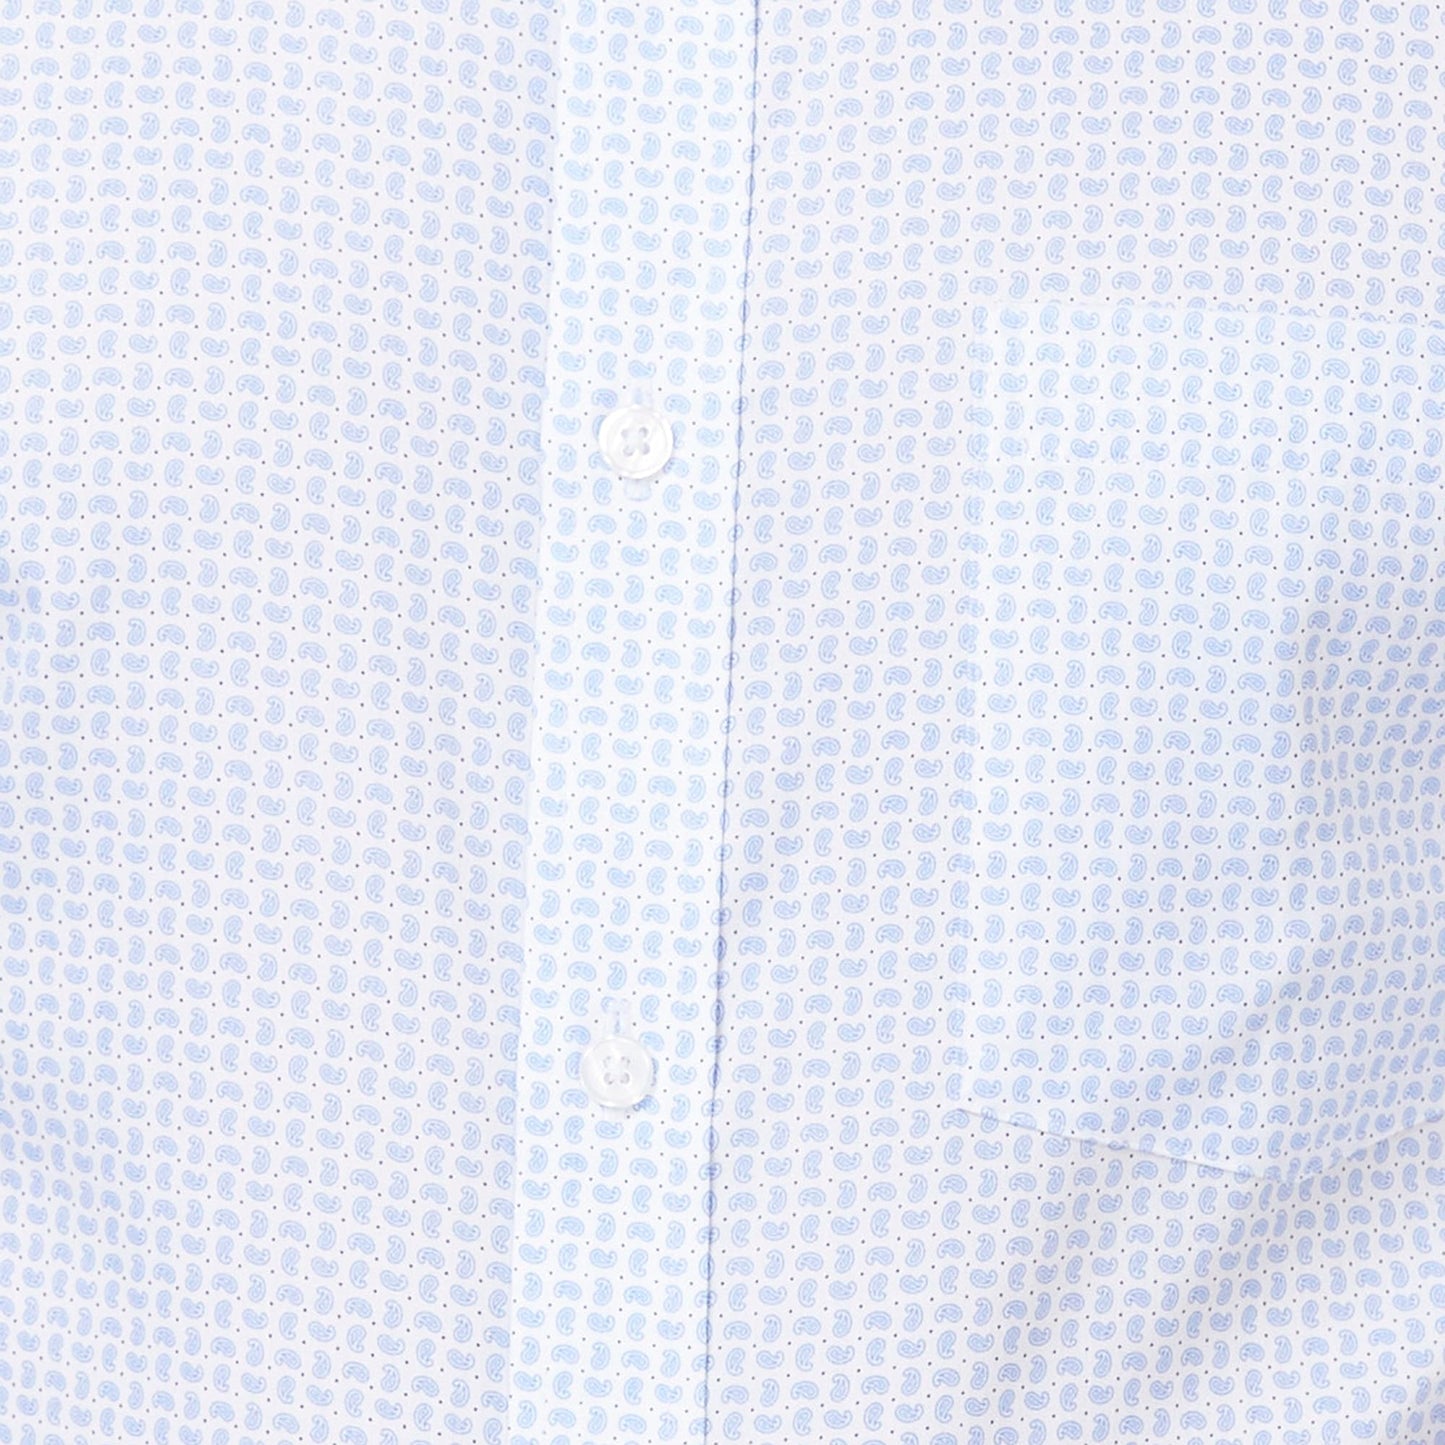 Park Avenue Men's Print Regular Fit Shirt (Blue)